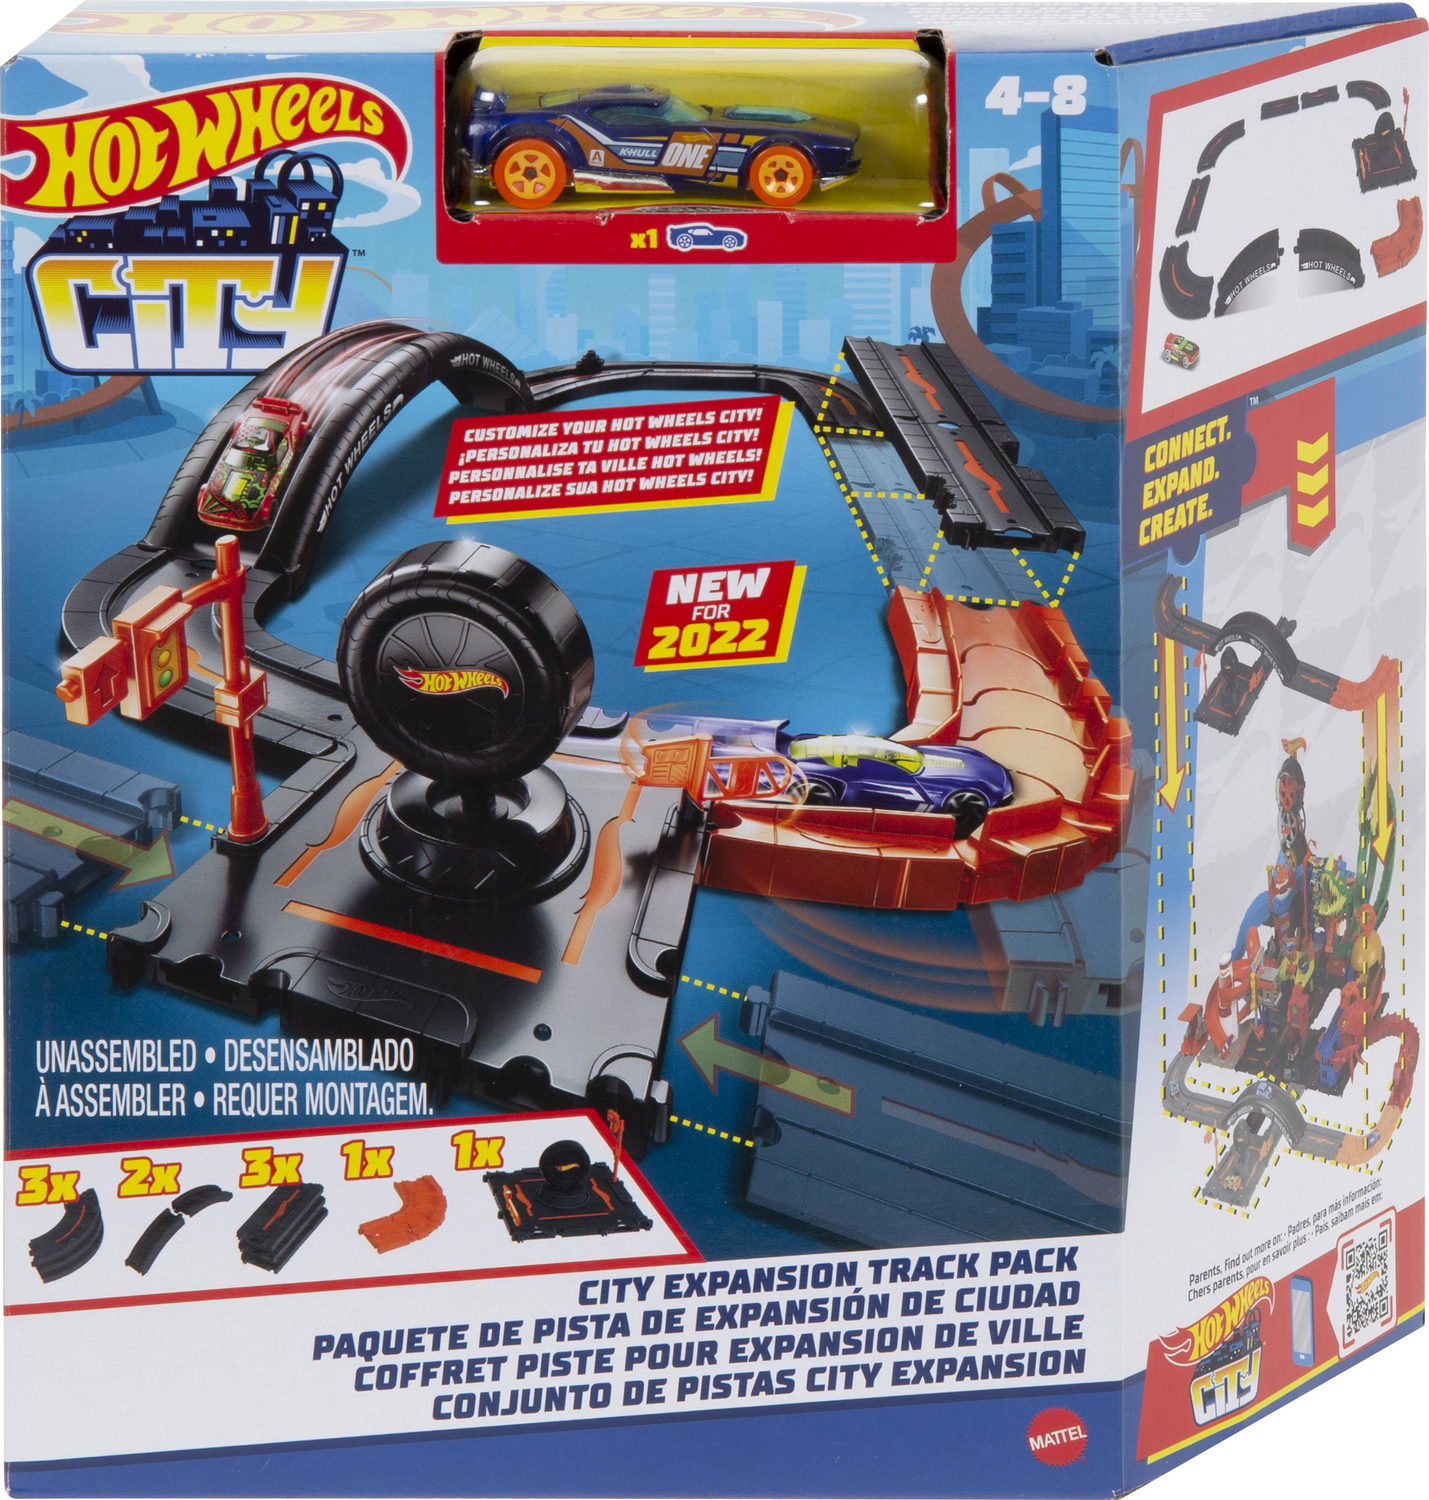 Hot Wheels City toy vehicle - The Toy Box Hanover